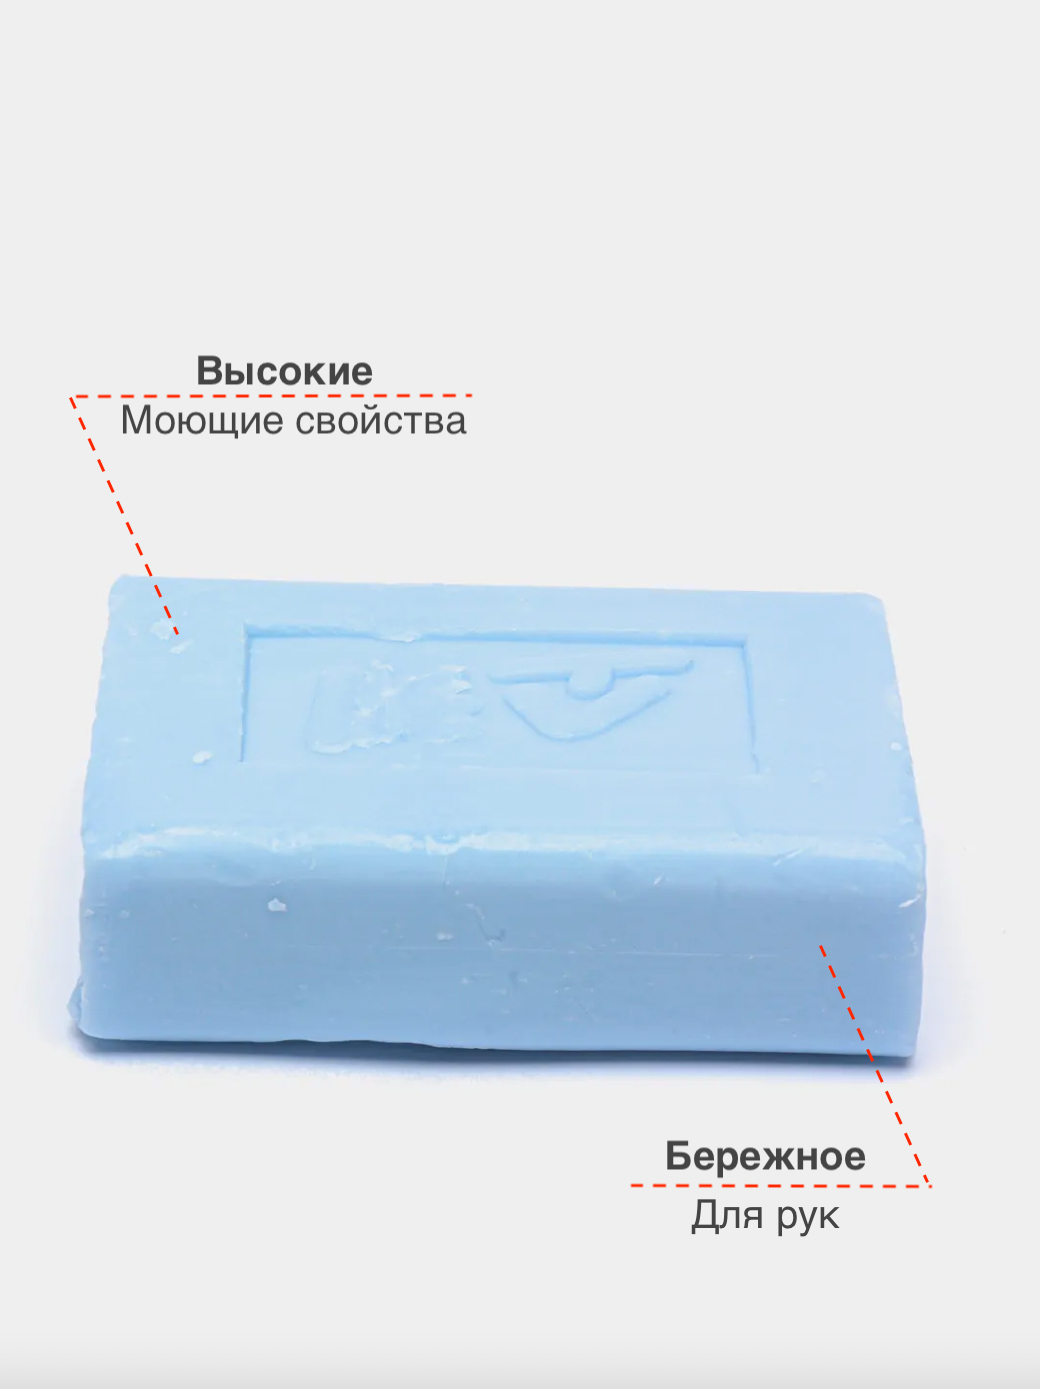 Характеристики жидкого мыла